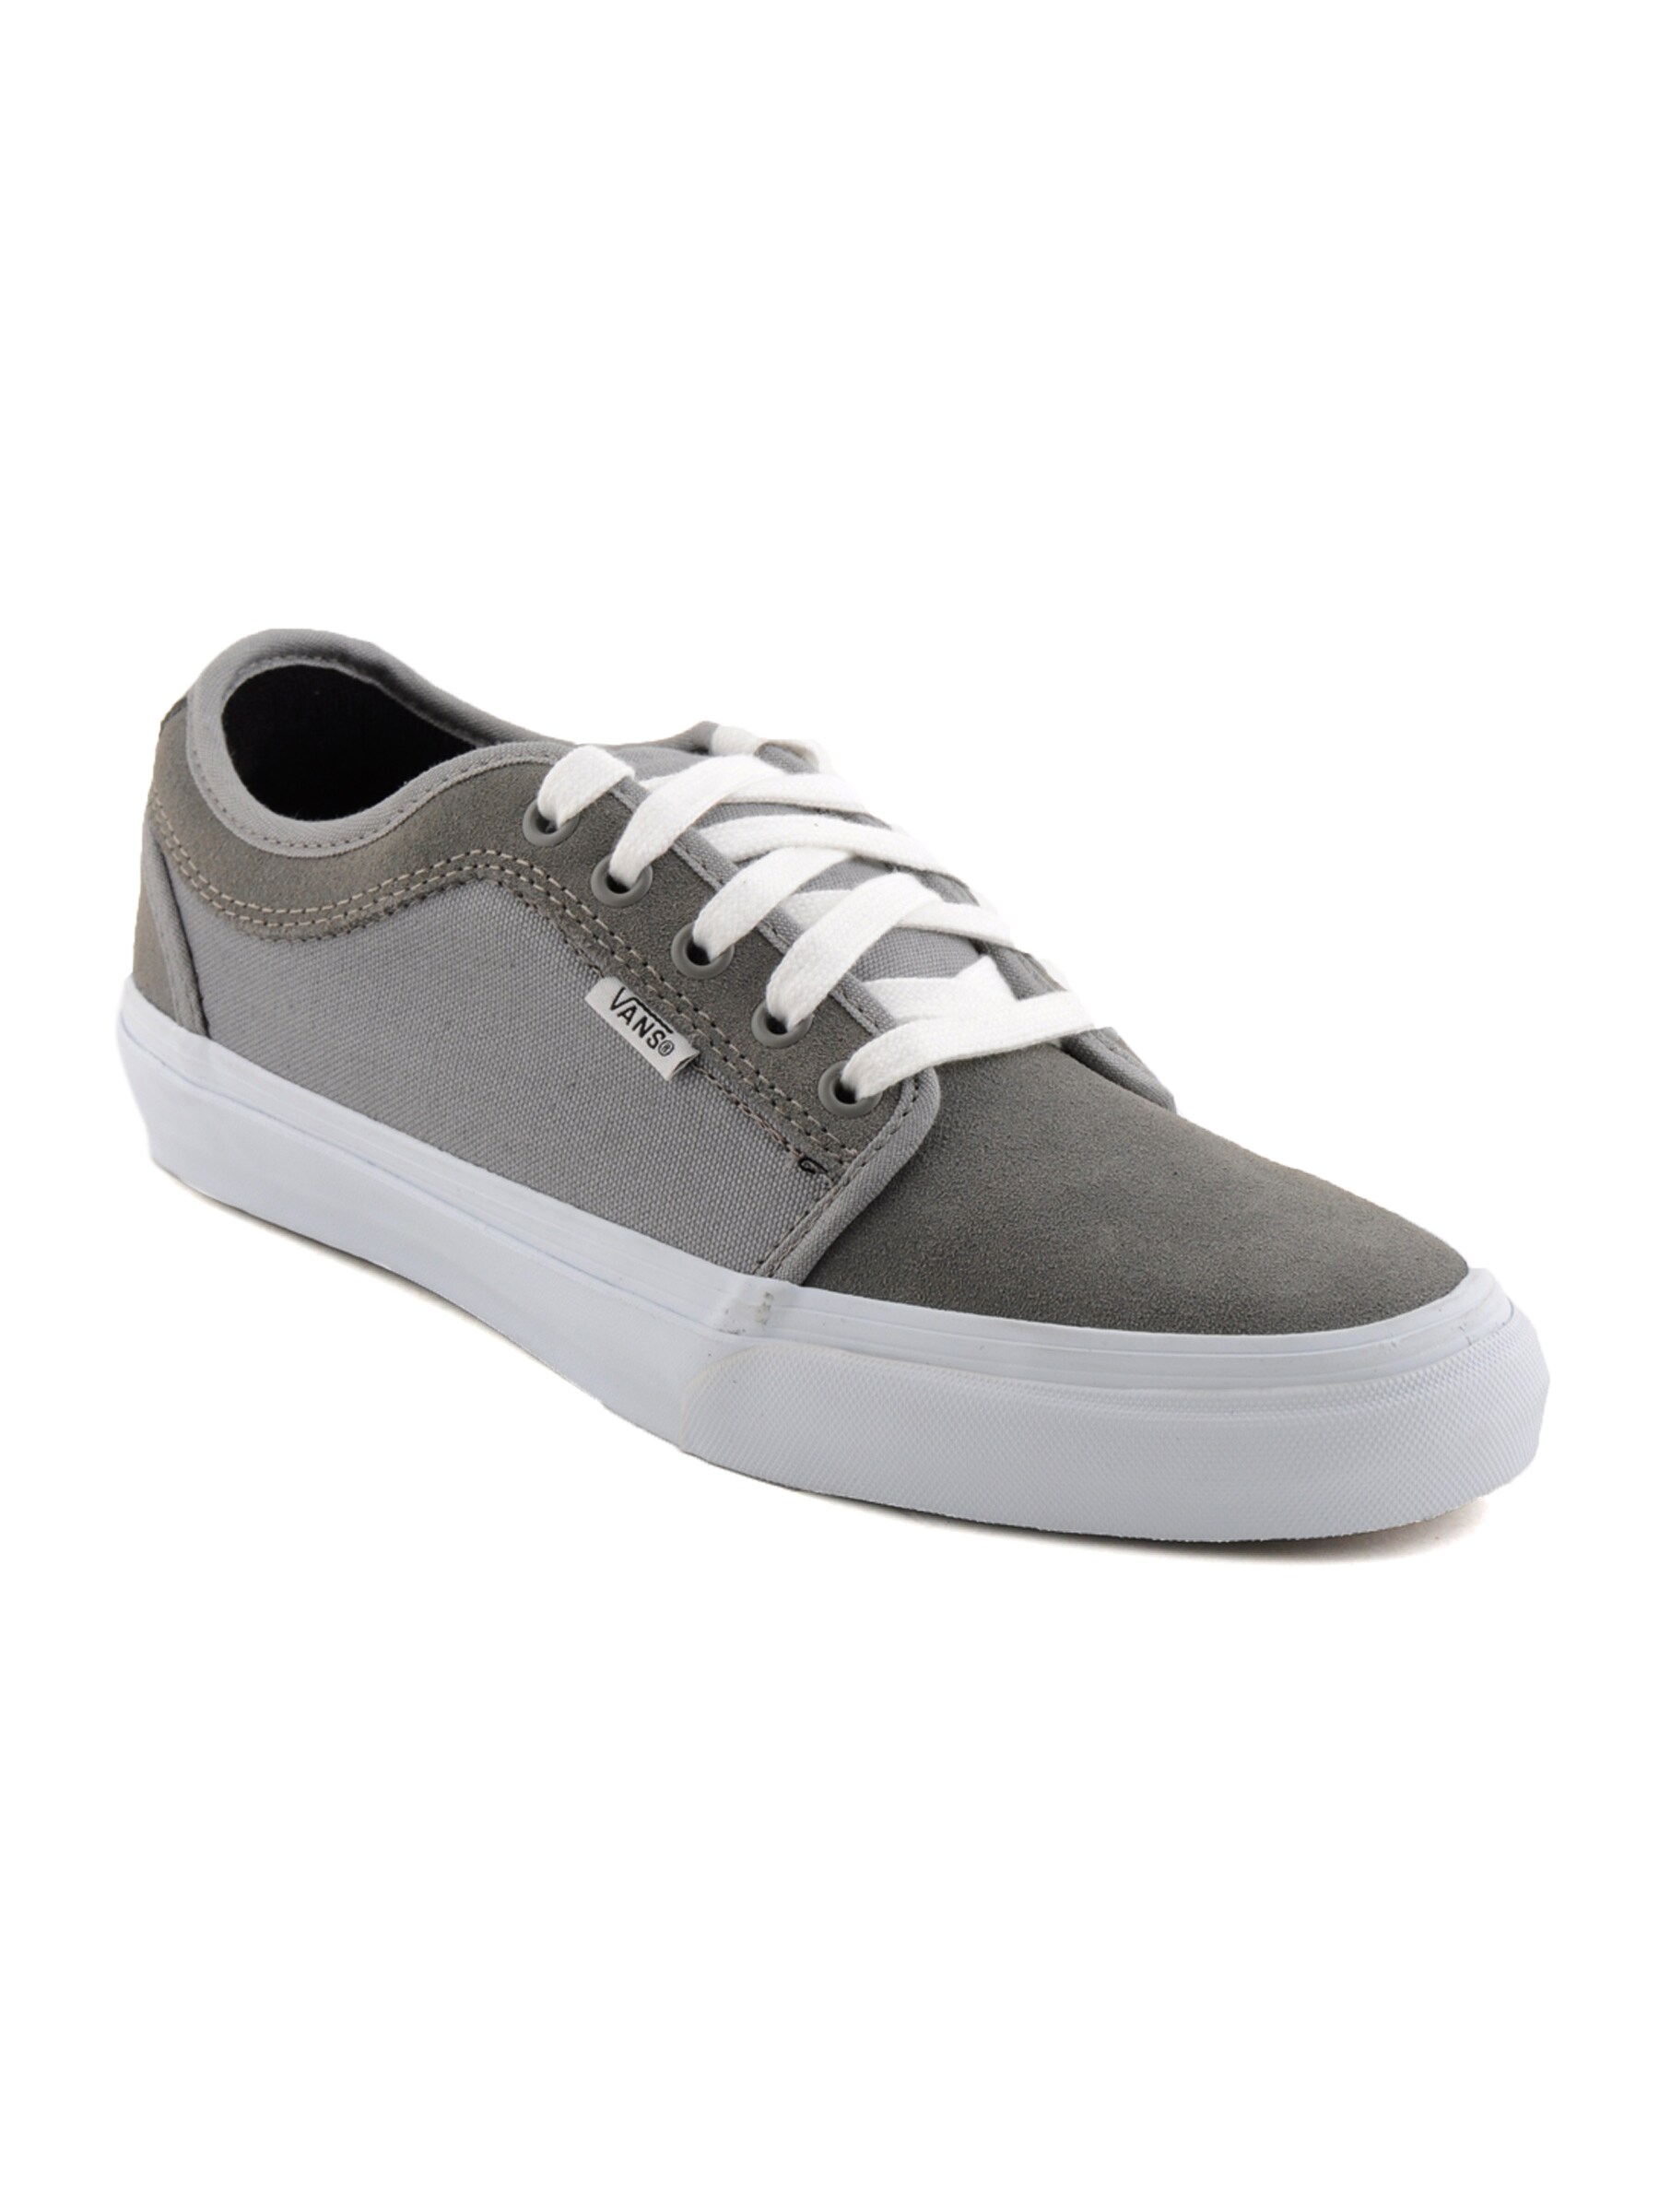 Vans Men Chukka Low Grey Casual Shoes